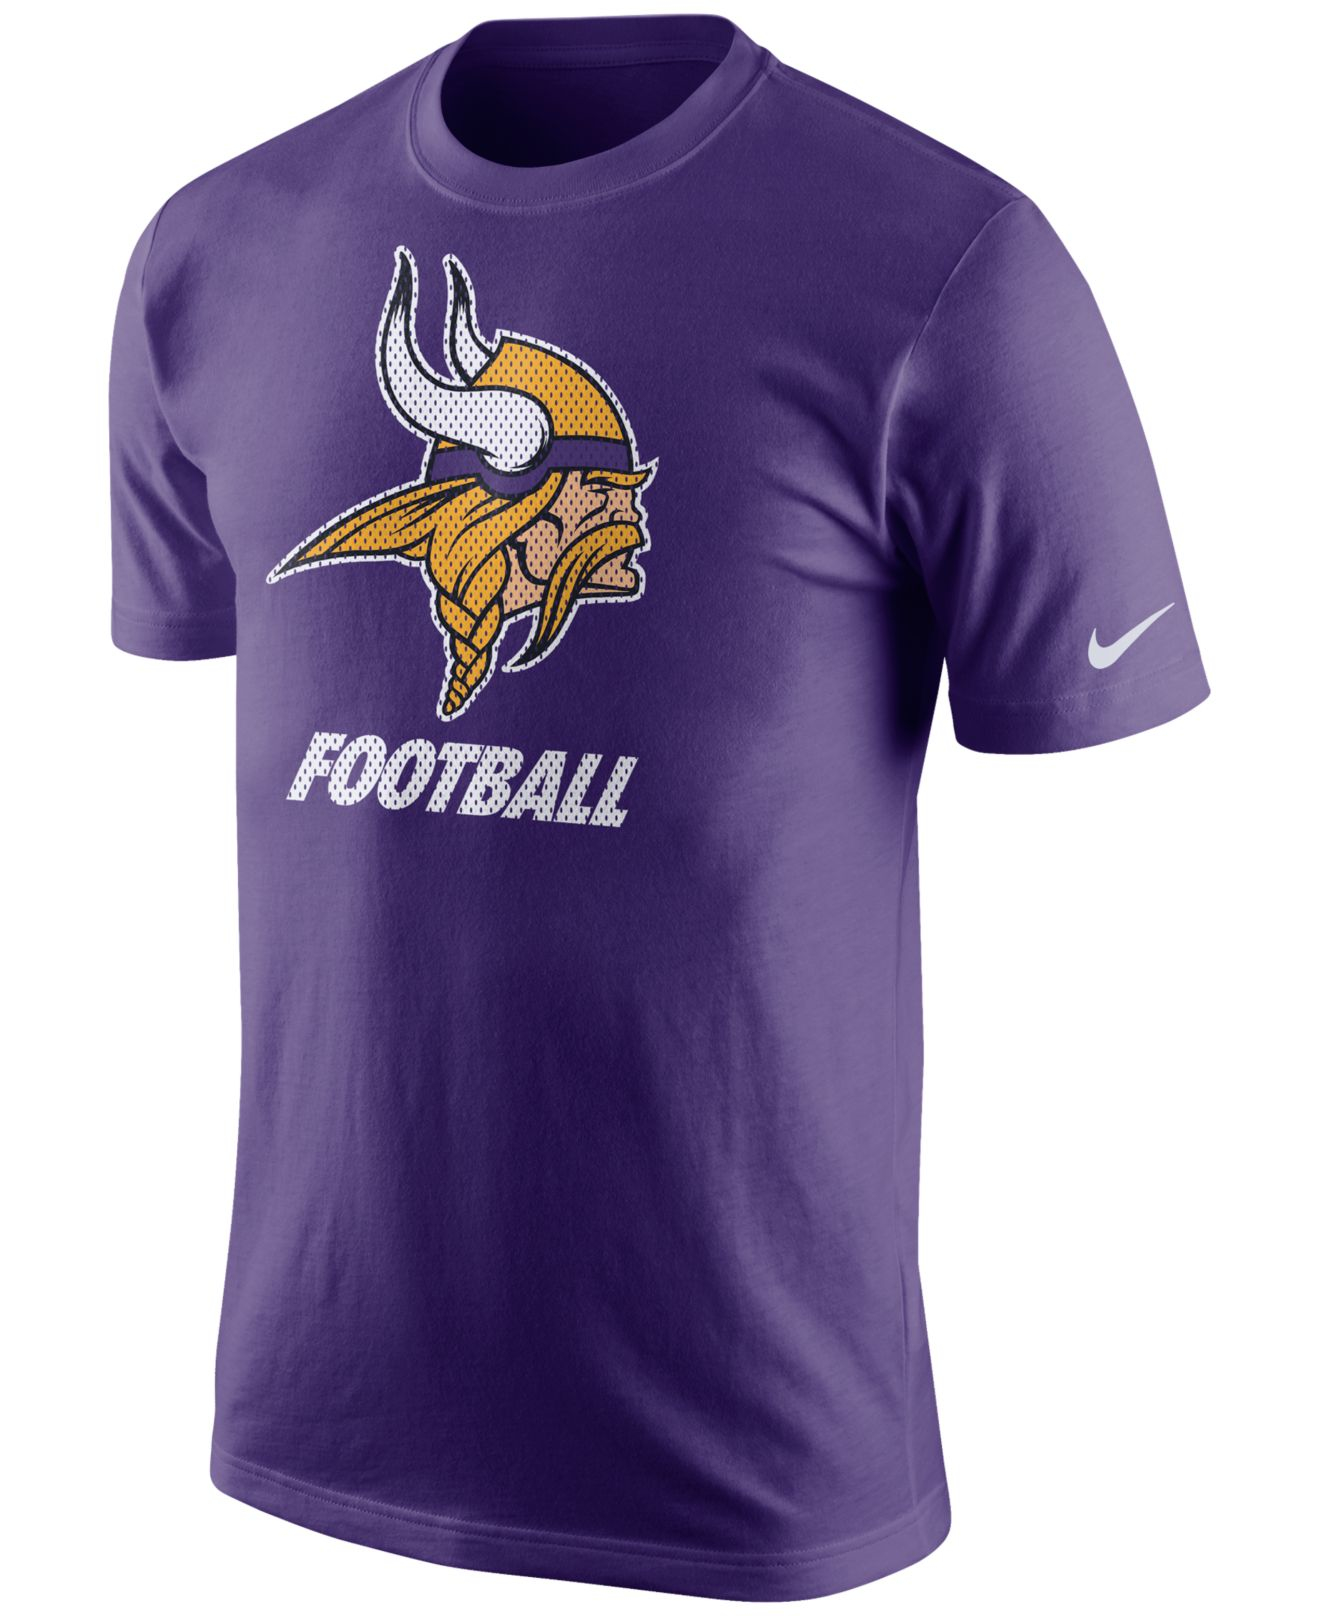 Lyst - Nike Men's Minnesota Vikings Facility T-shirt in Purple for Men